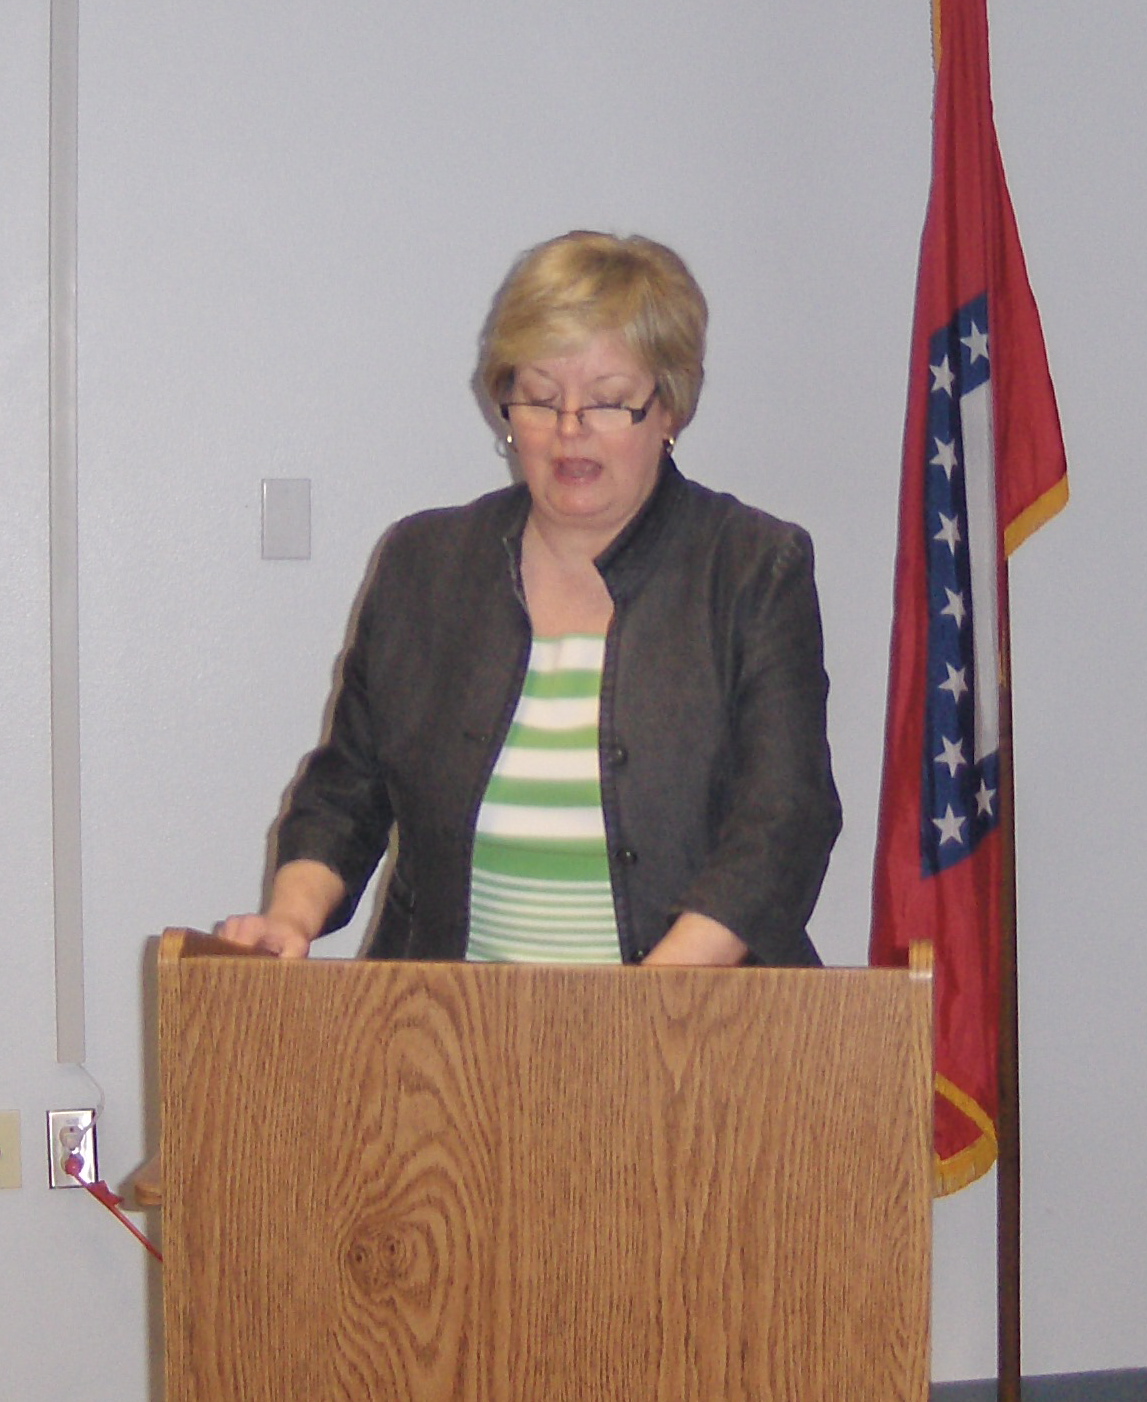 a lady giving a presentation at a podium